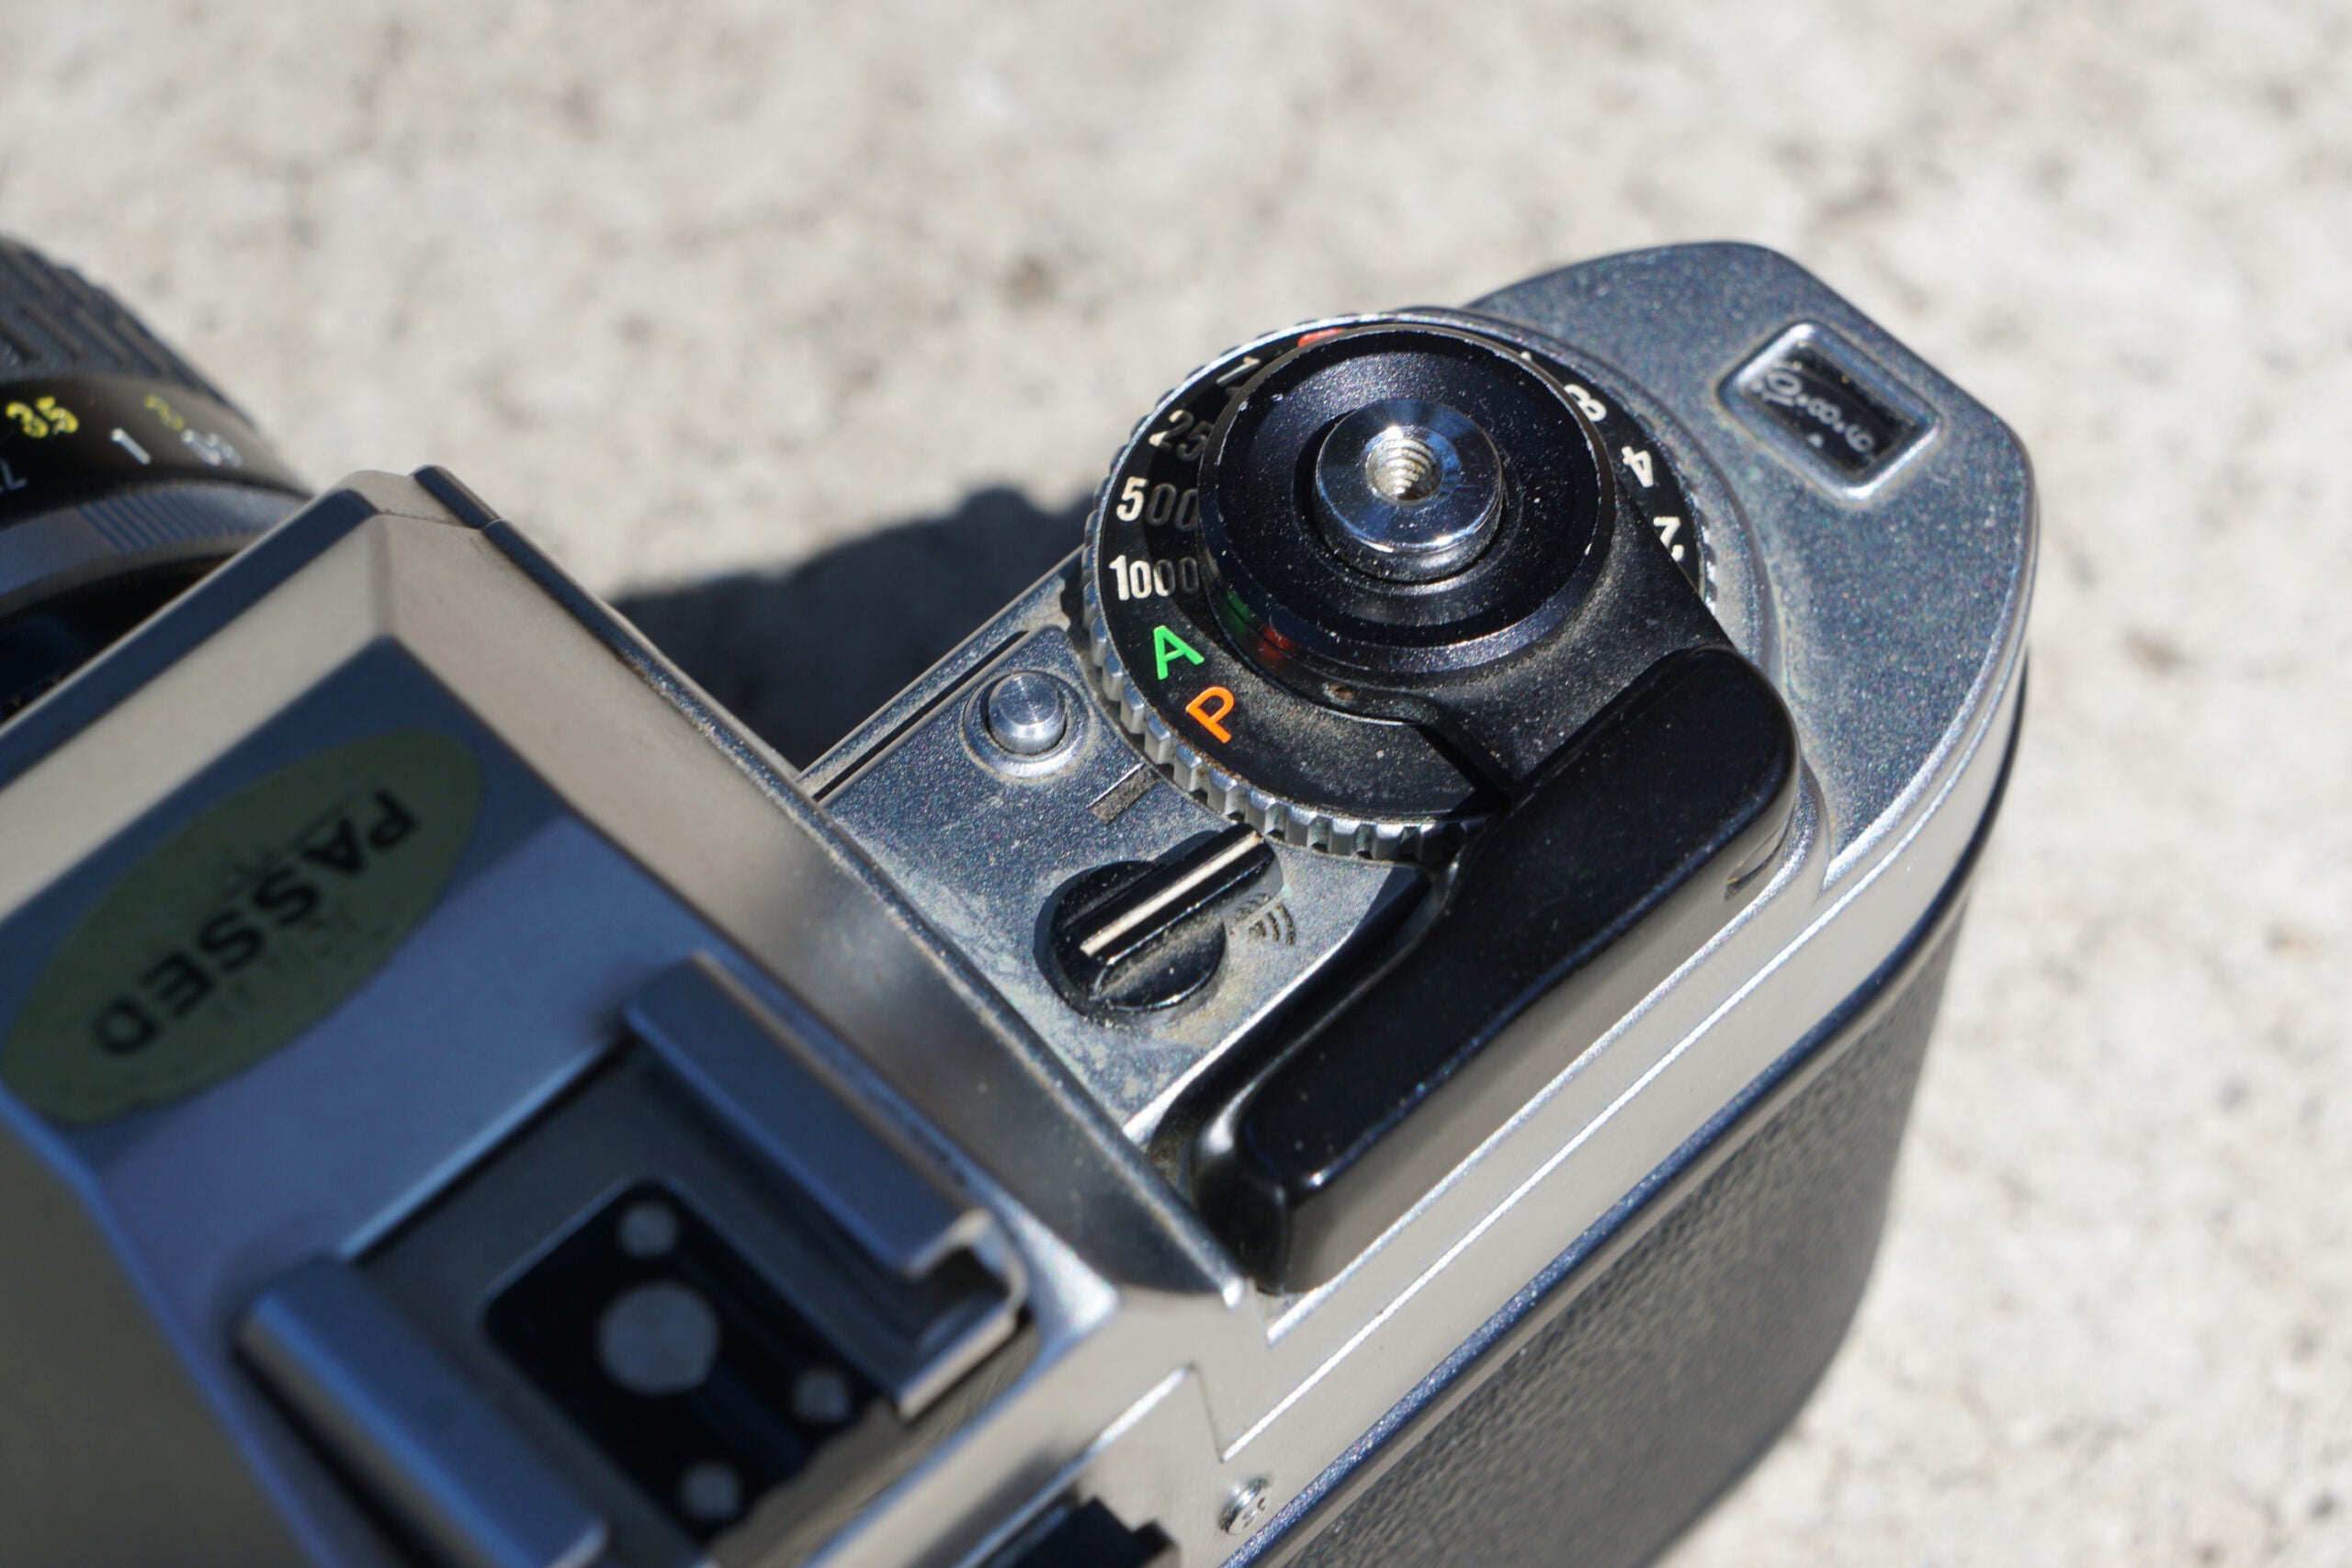 The Nikon FG film camera shutter button